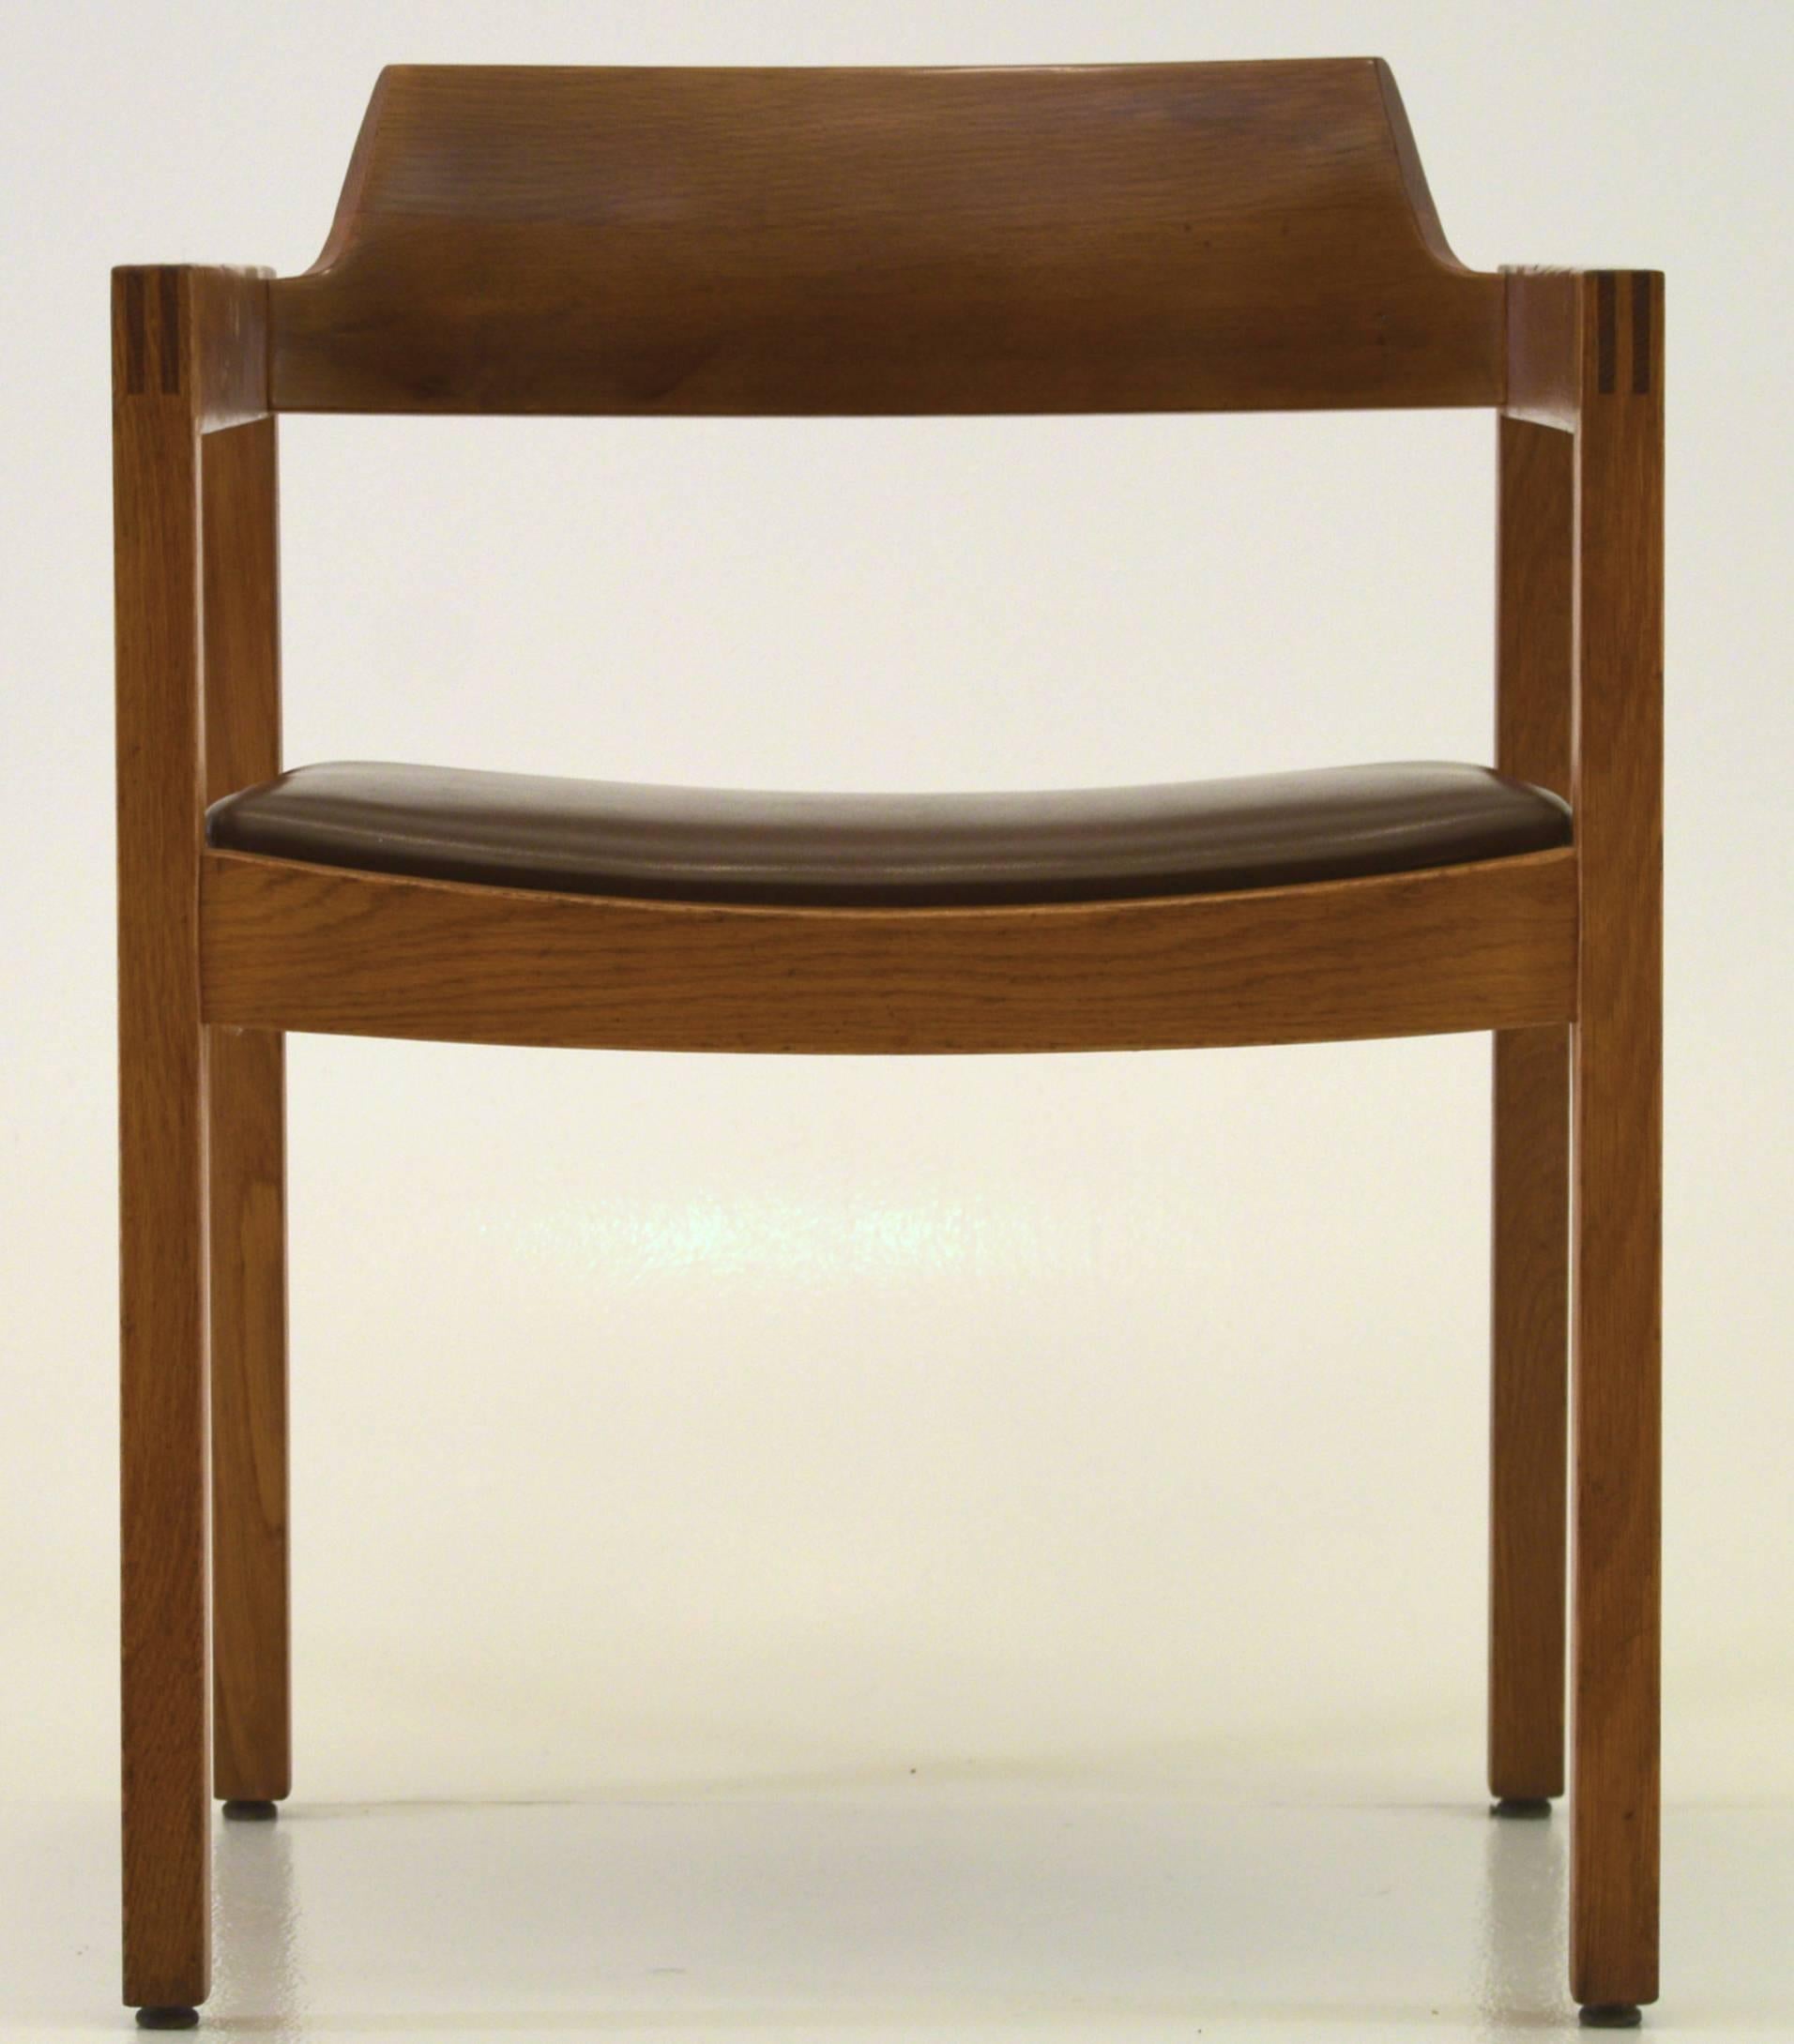 American Single Desk Chair by the Gunlocke Company